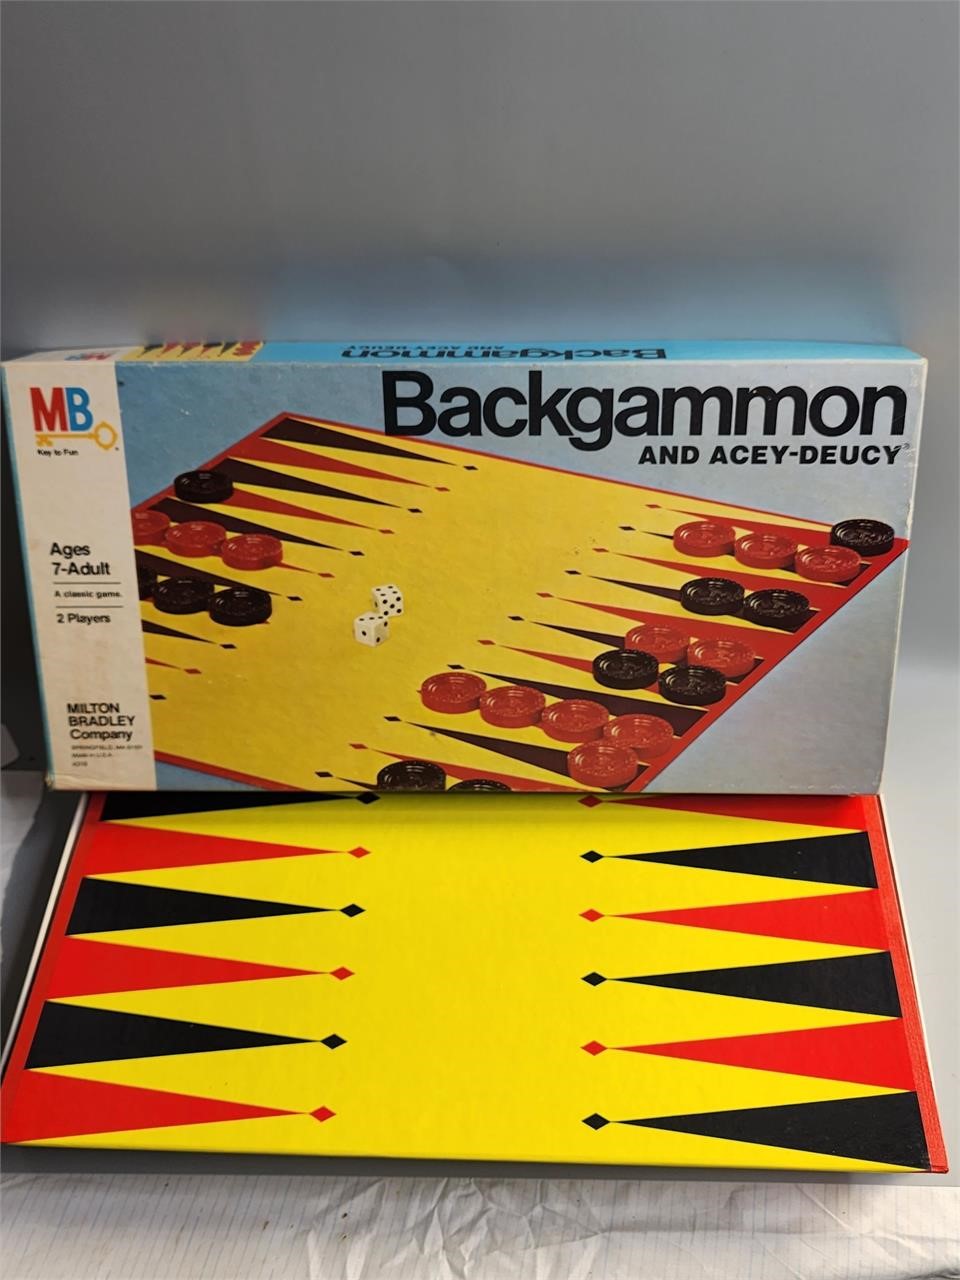 1973 backgammon new game